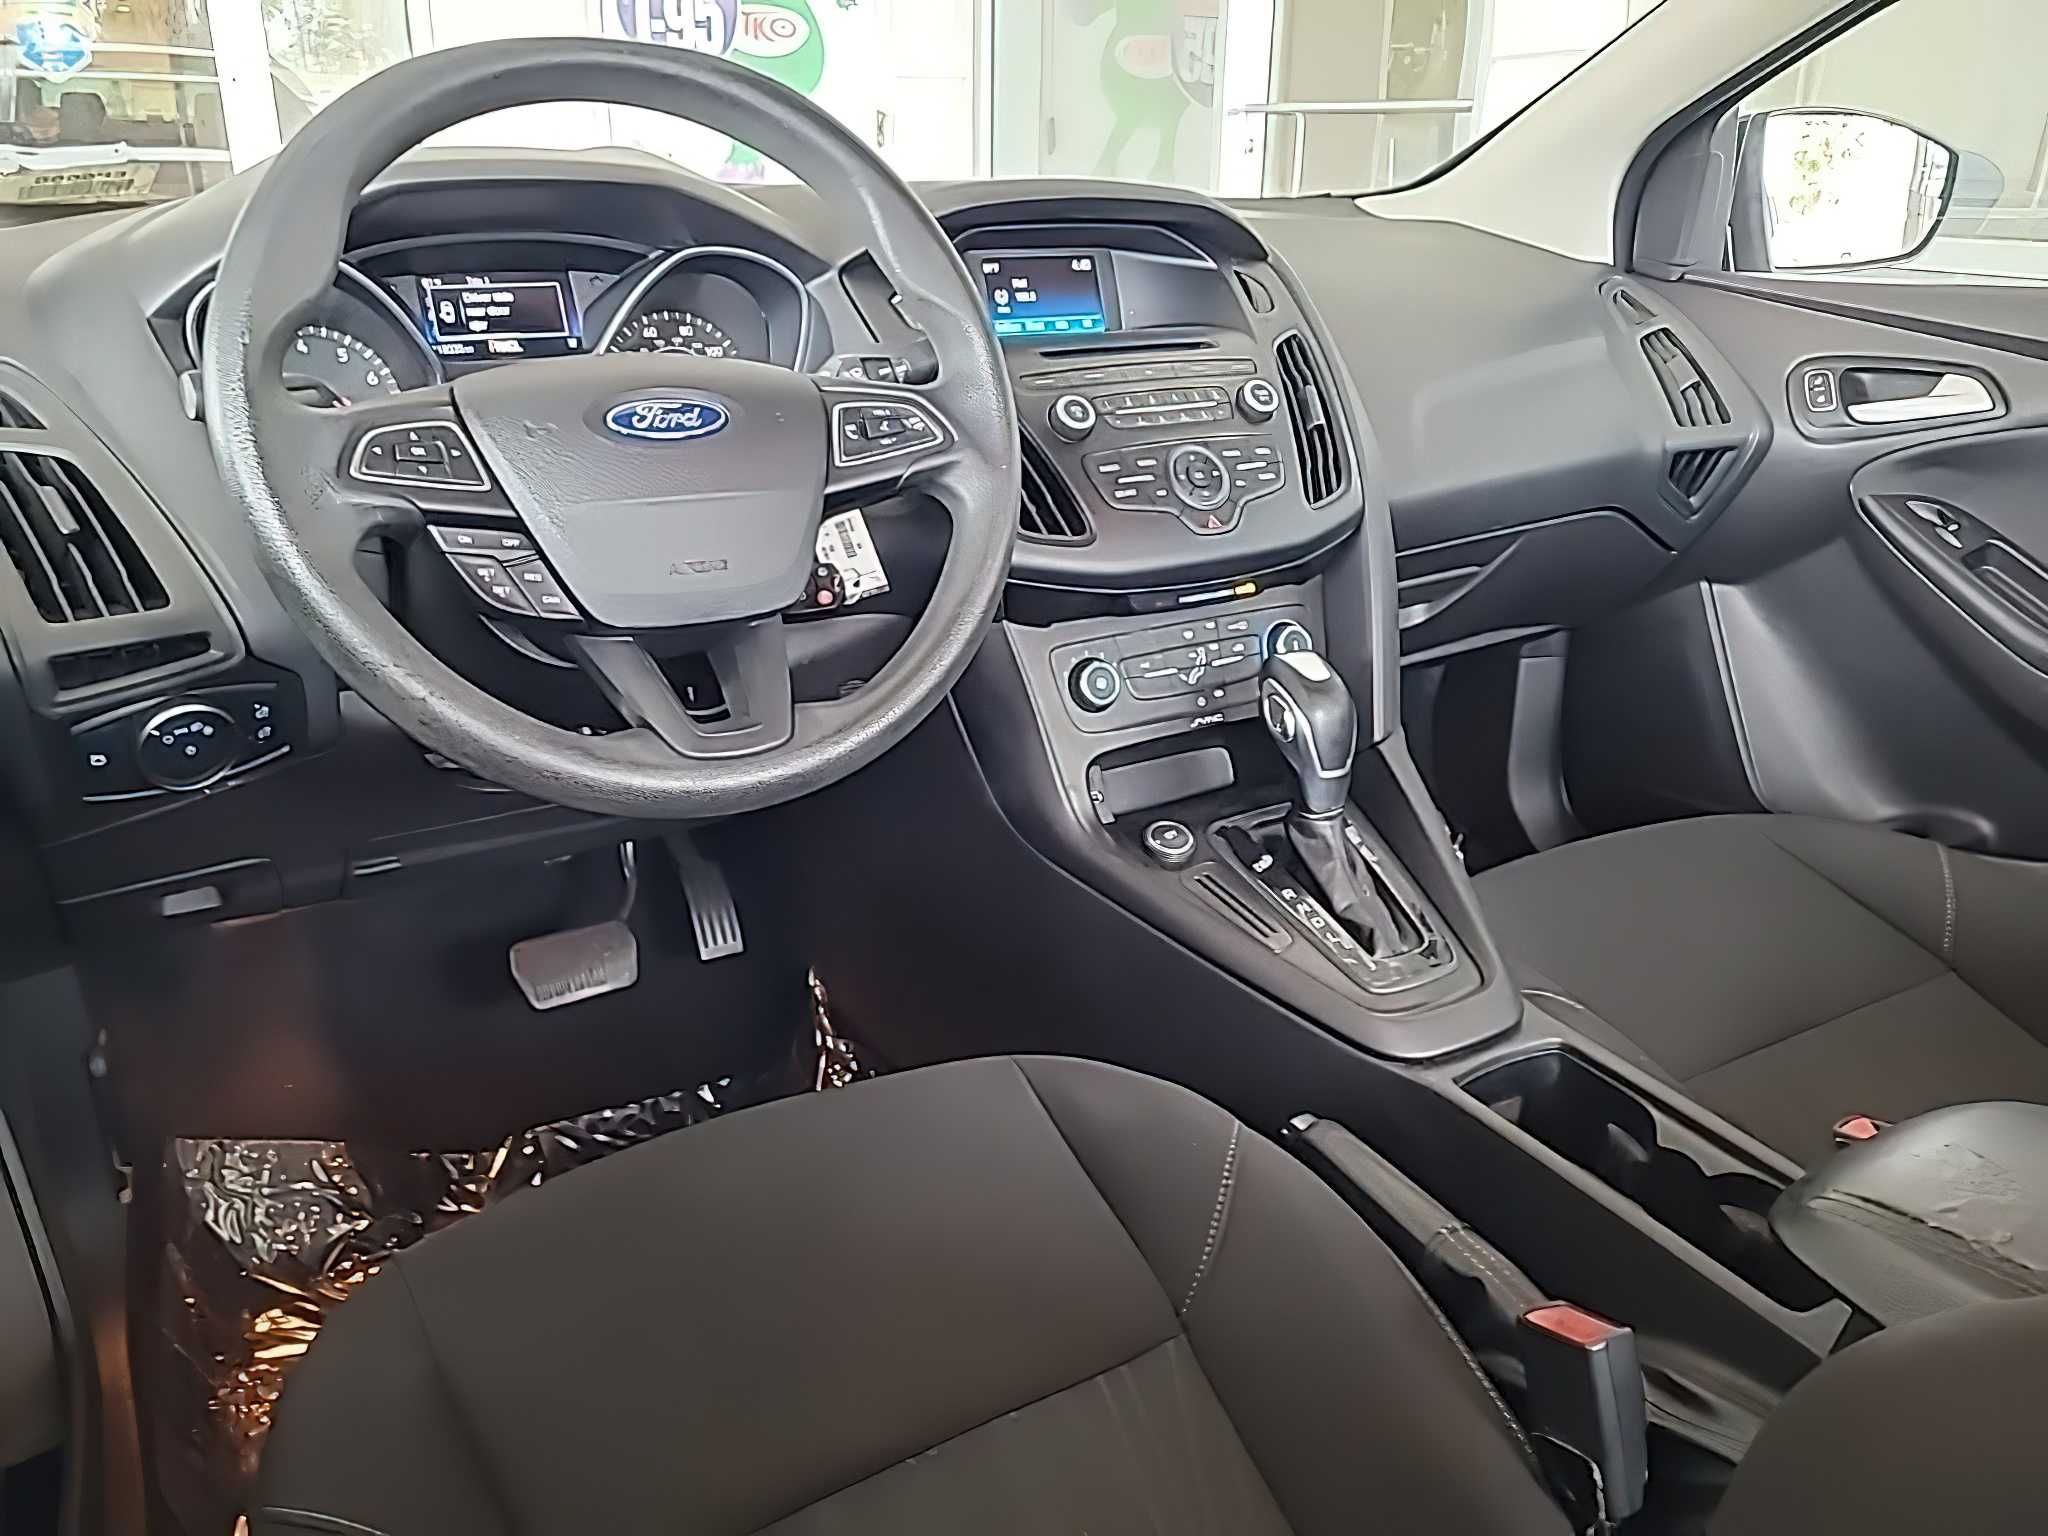 Ford Focus SE 2.0 2015